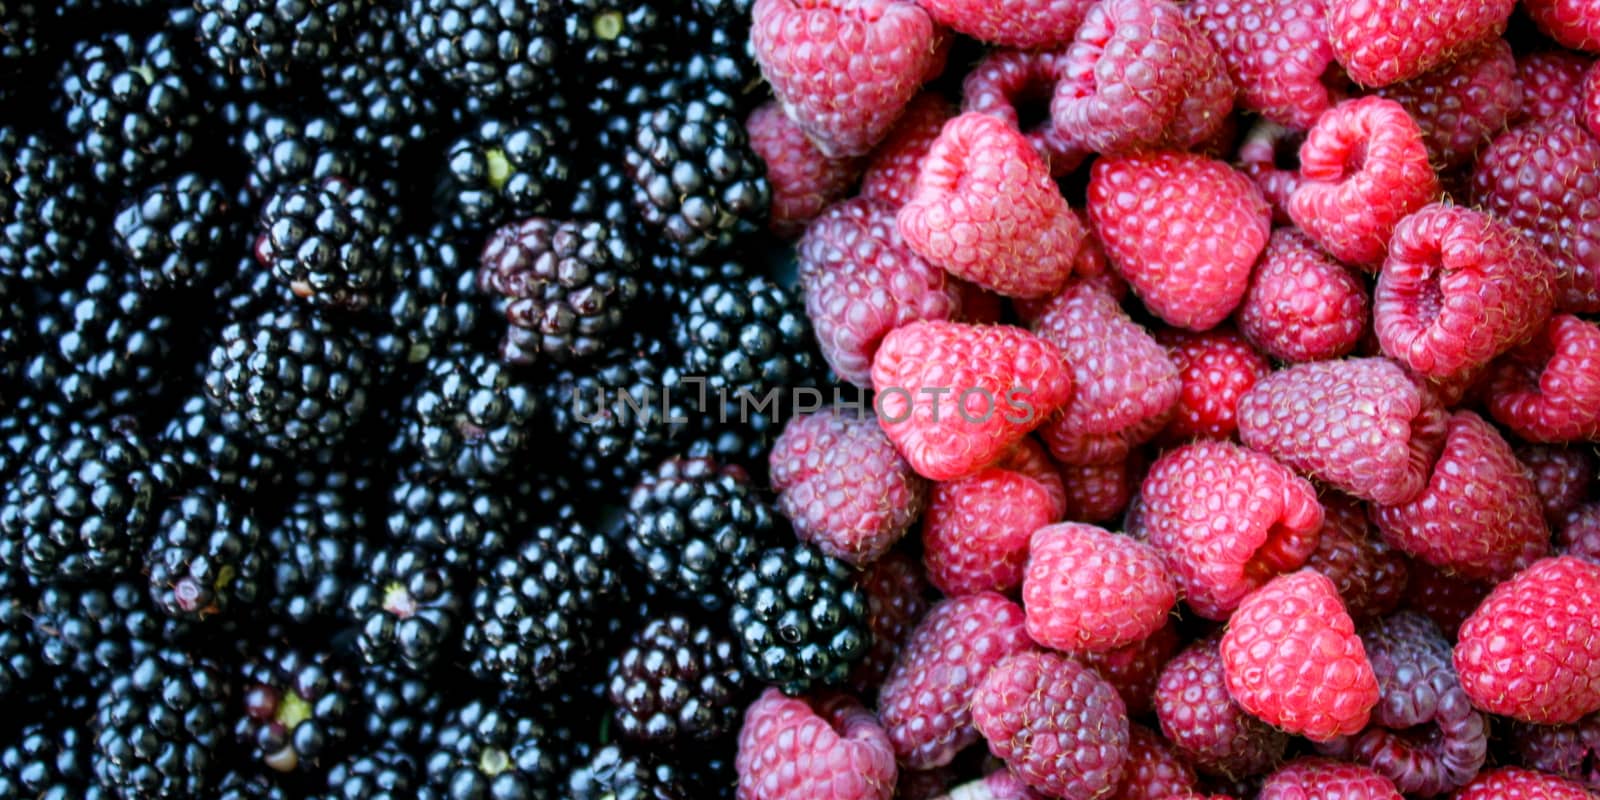 Banner. Top view. Full frame of blackberries and raspberries. Zavidovici, Bosnia and Herzegovina.